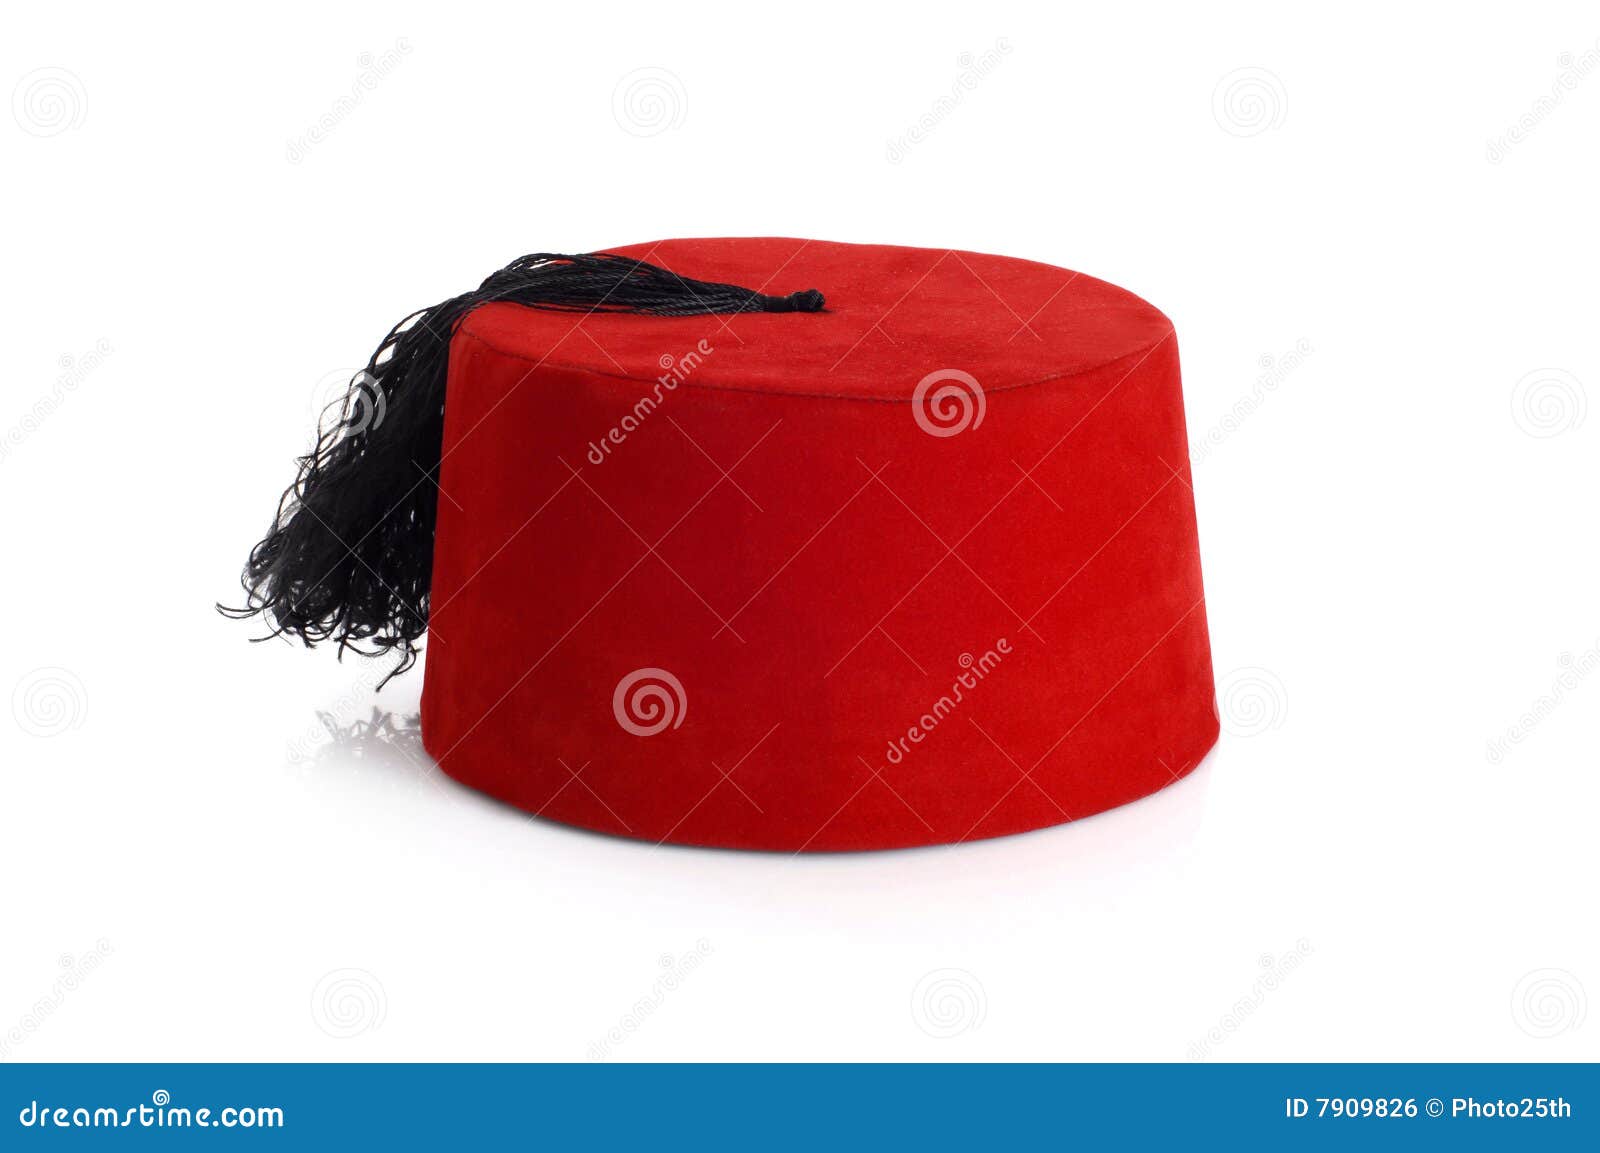 ottoman hat